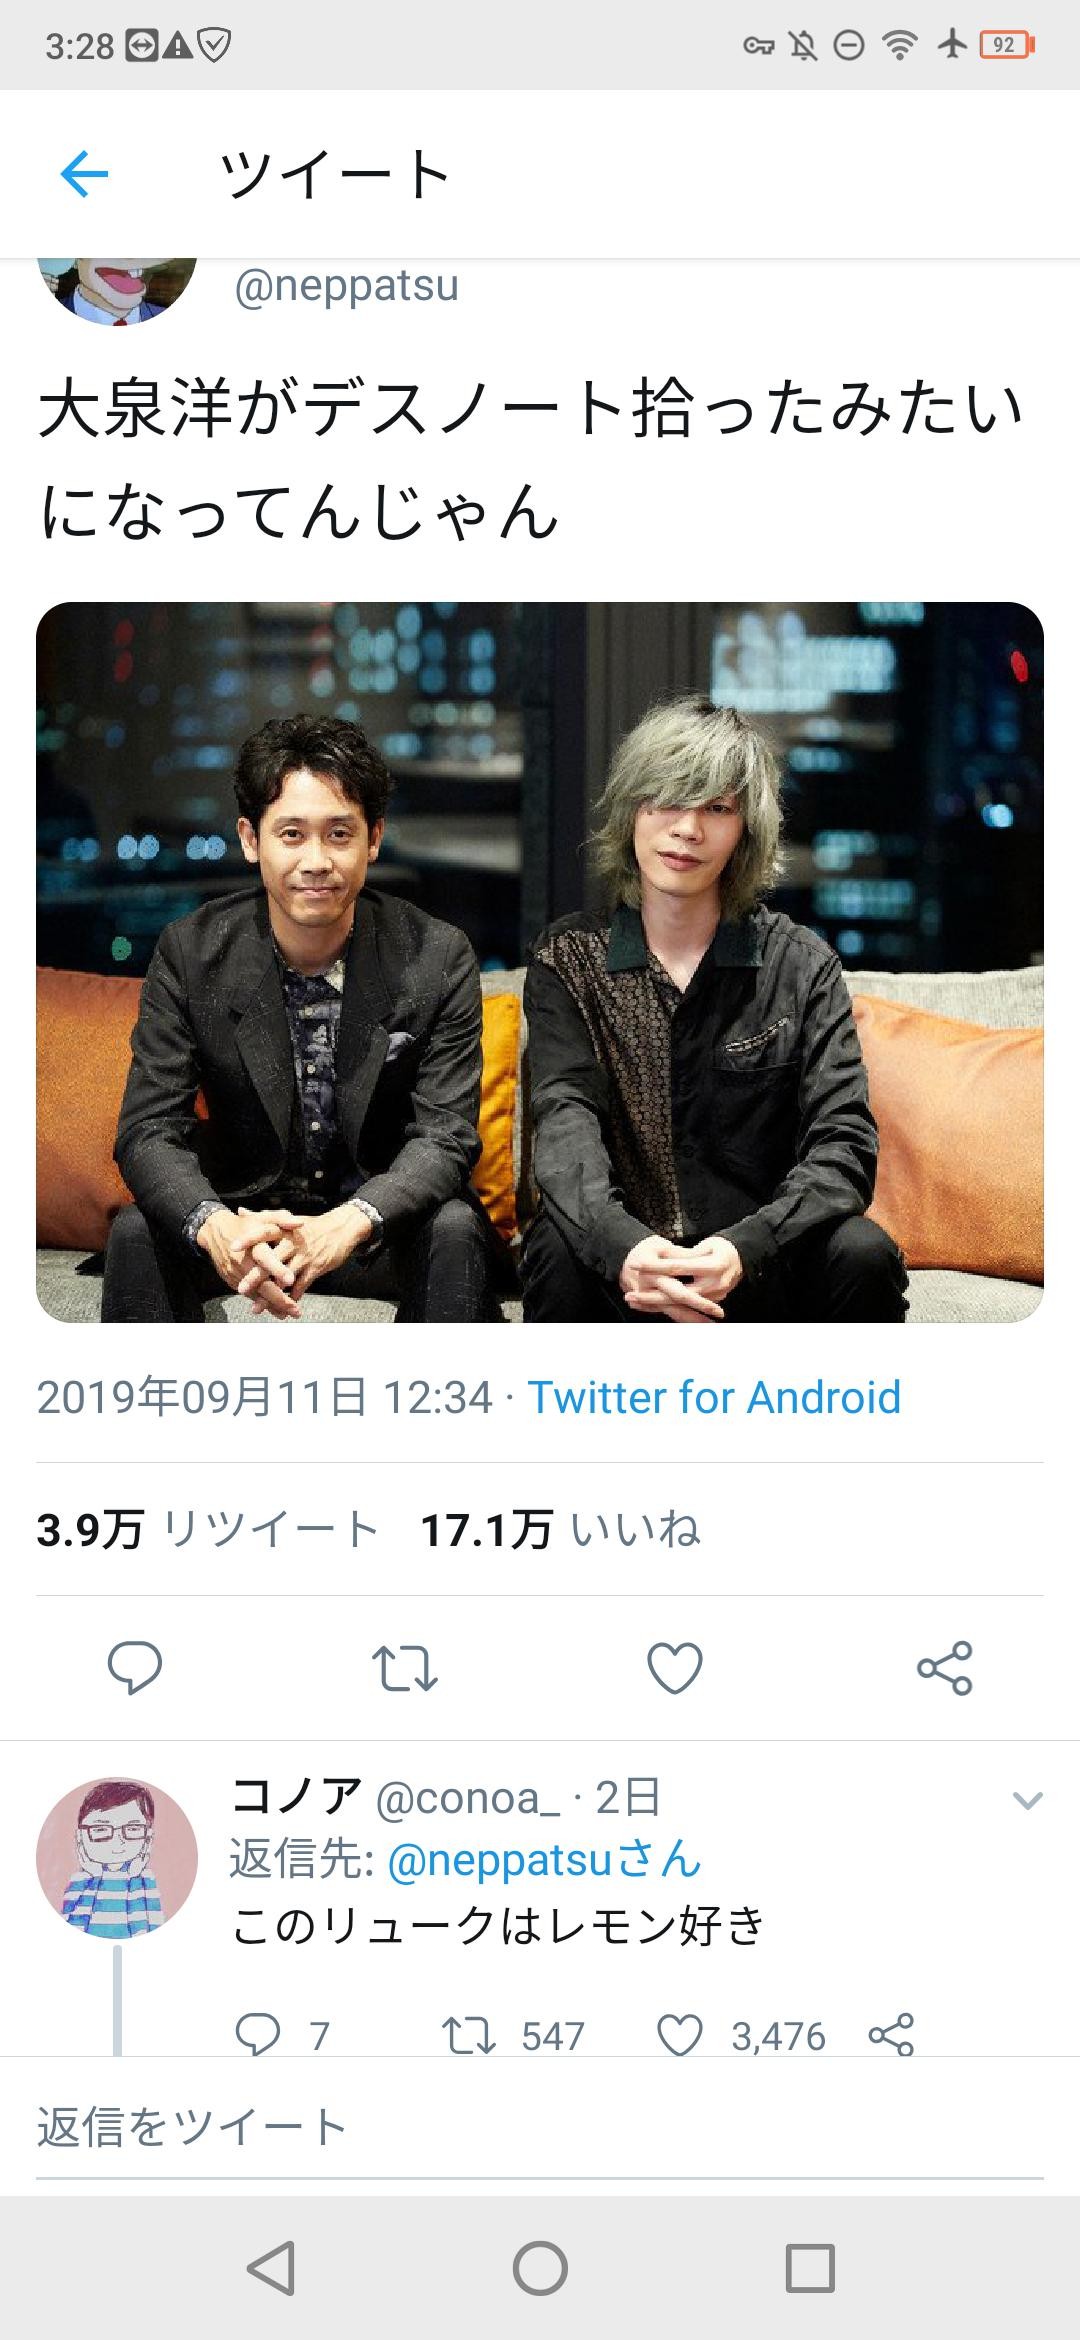 [Sad news] Genji Yonezu, finally the people of Twitter are ridiculed and buzz